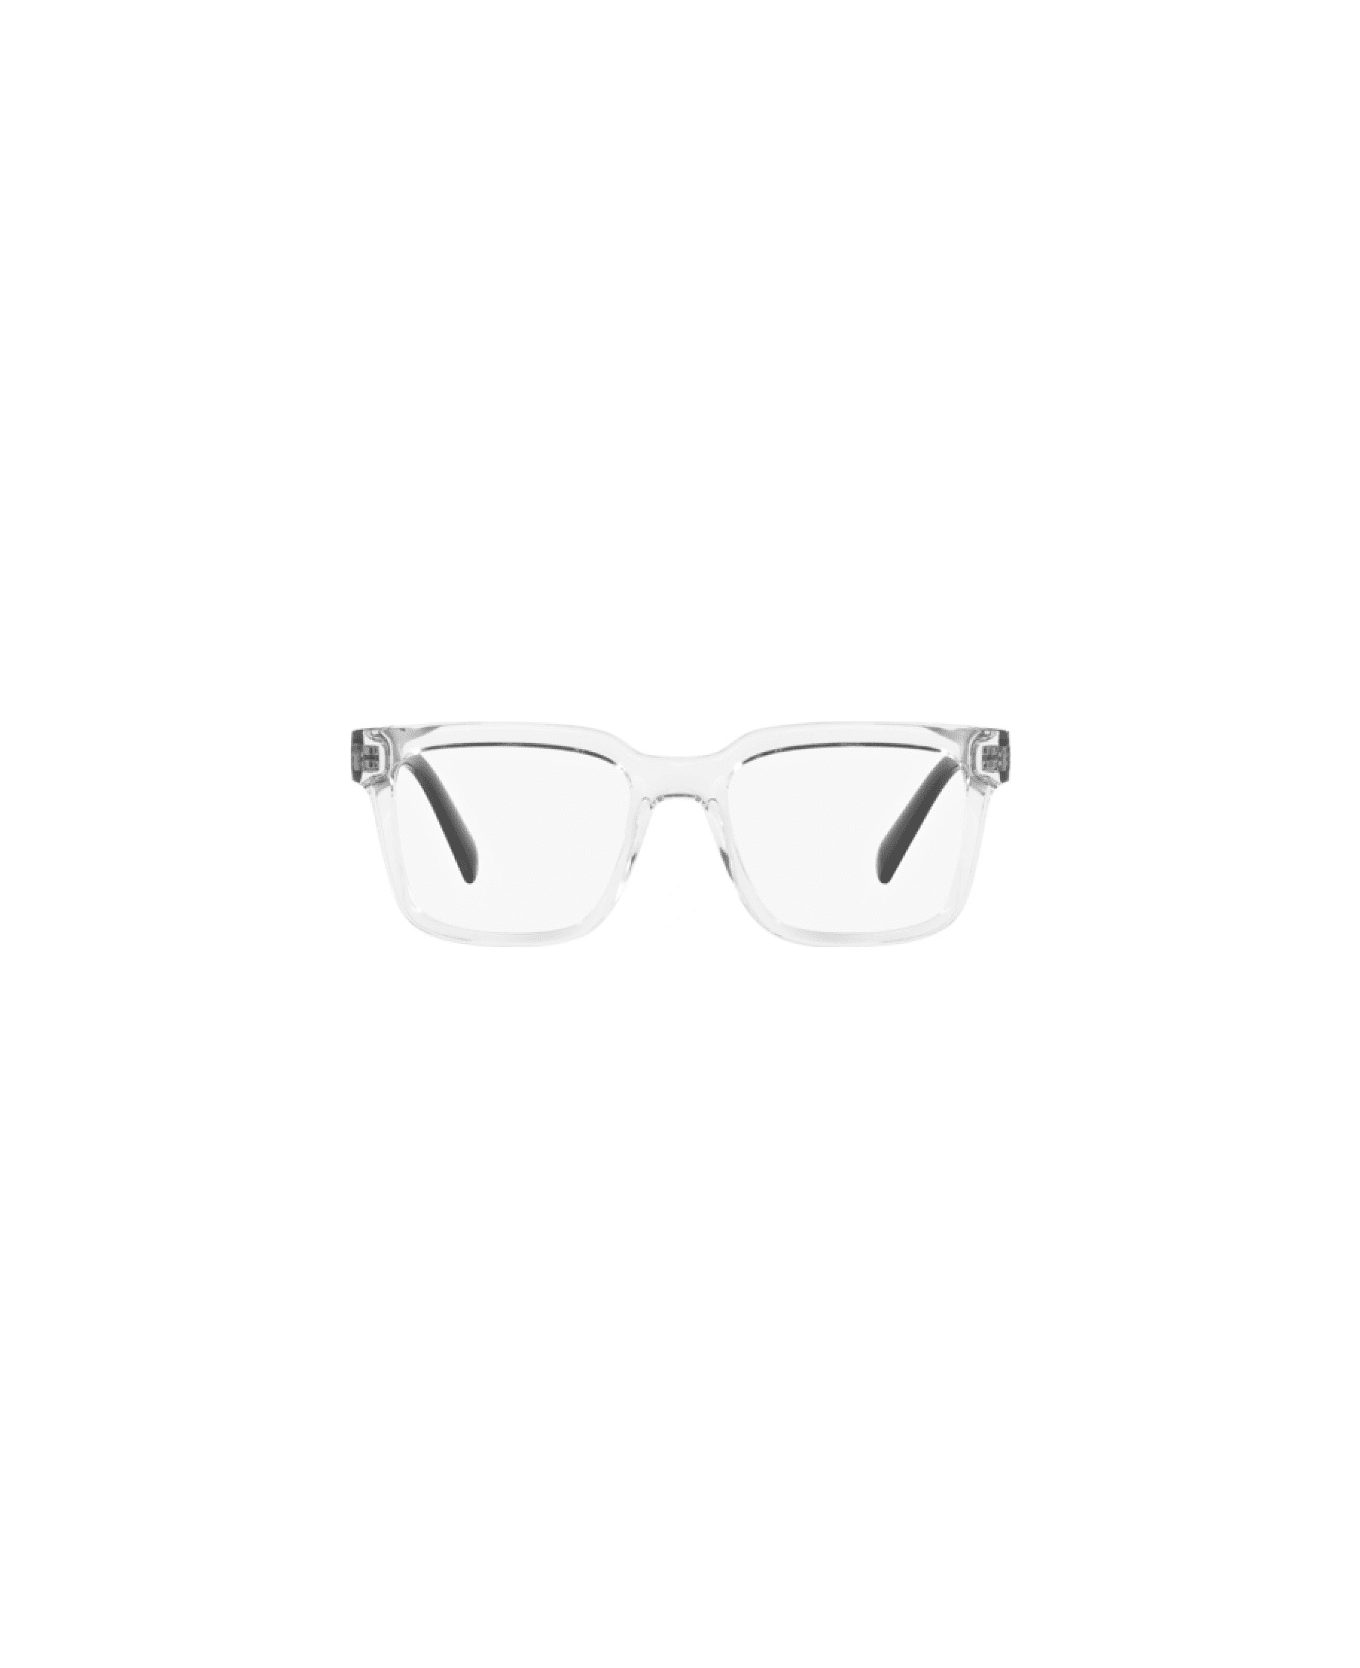 Dolce & Gabbana Eyewear DG5101 3133 Glasses - Trasparente e nero